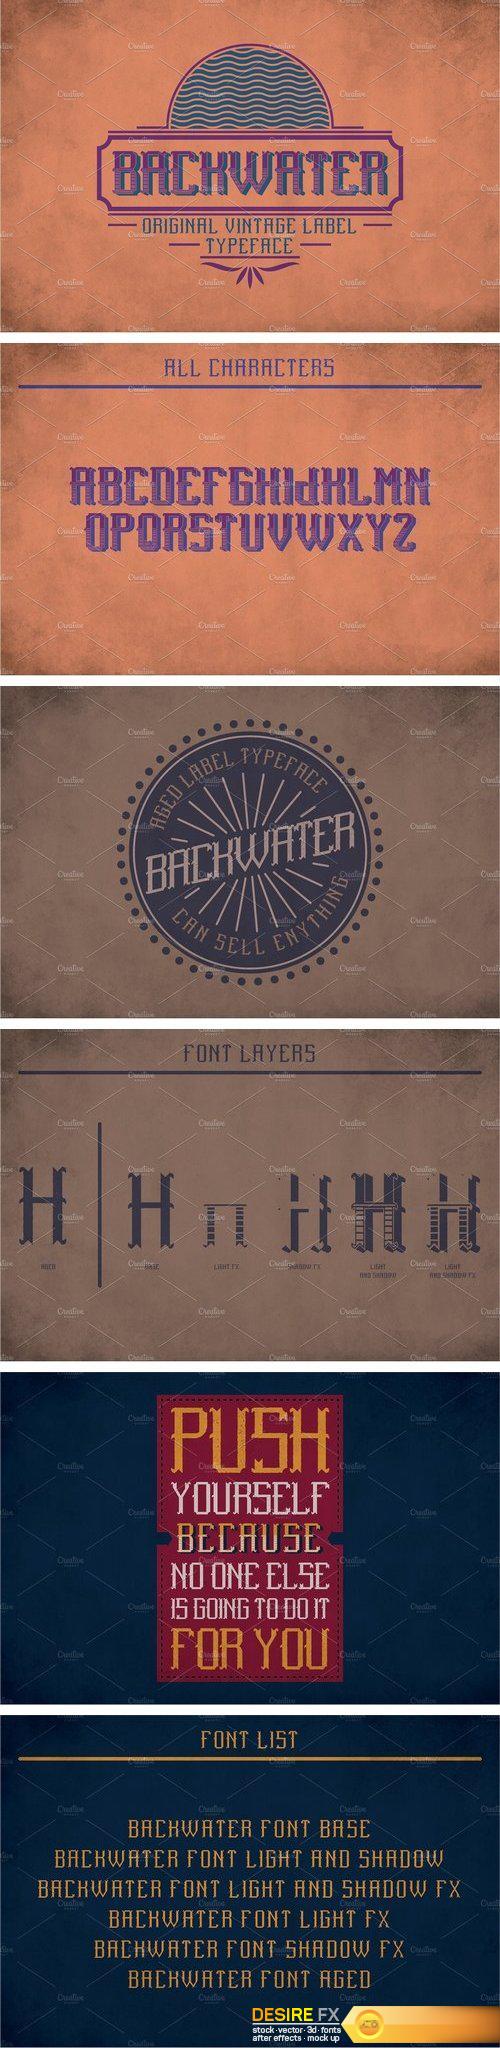 CM - Backwater Vintage Label Typeface 2091497